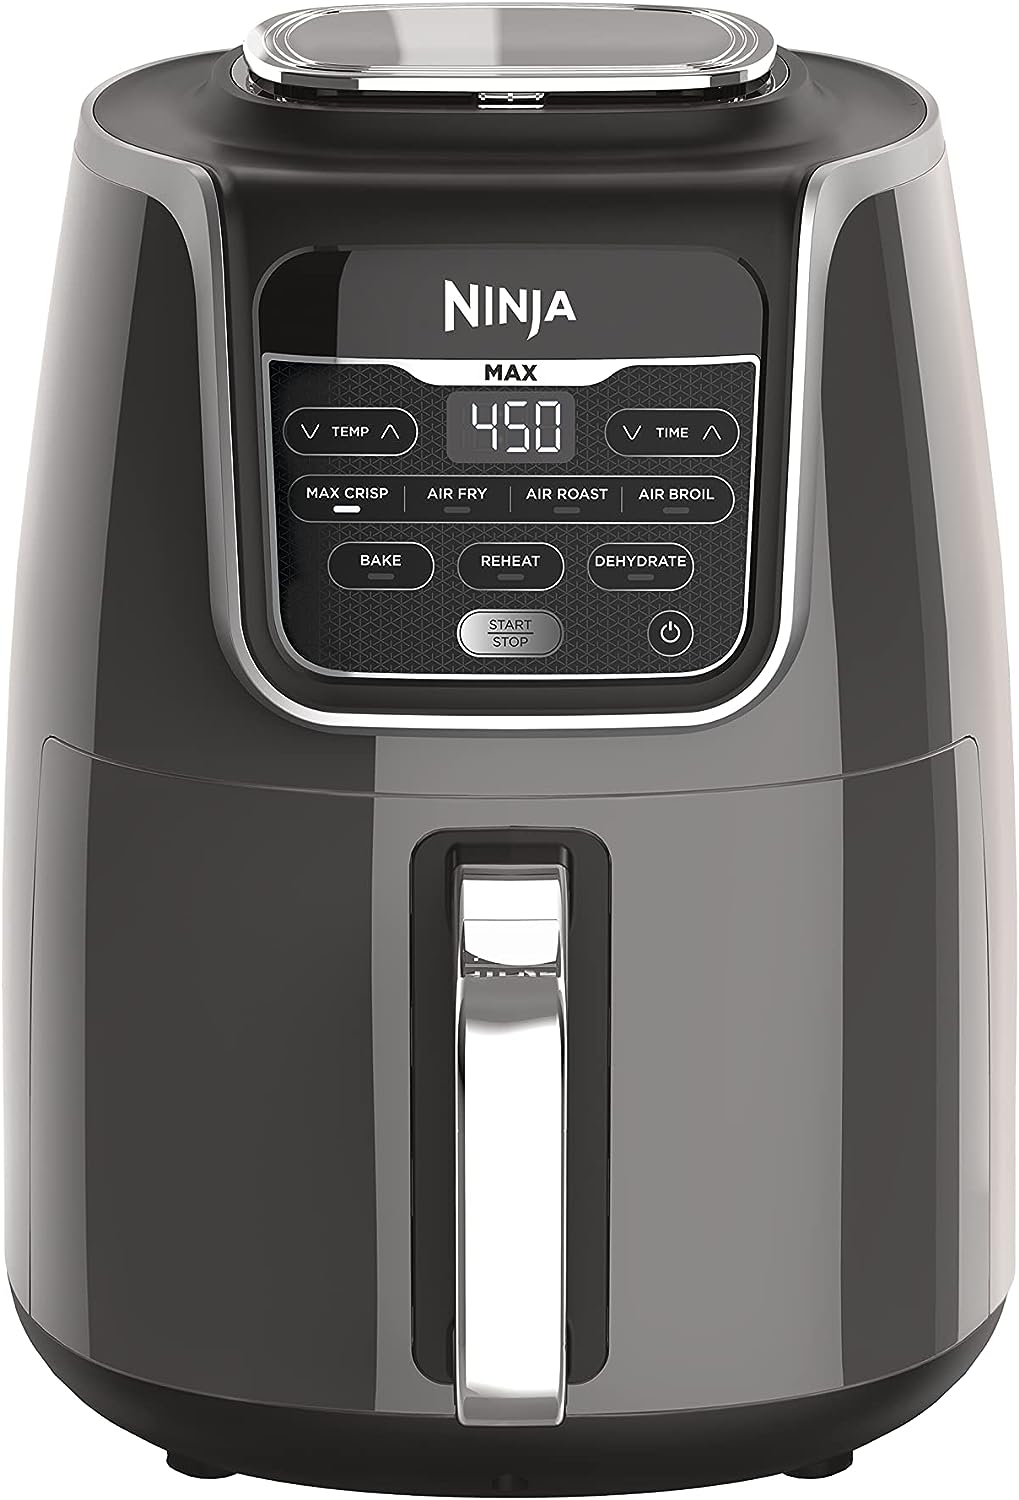 Ninja AF161 Max XL Air Fryer that Cooks, Crisps, Roasts, Bakes, Reheats and Dehydrates